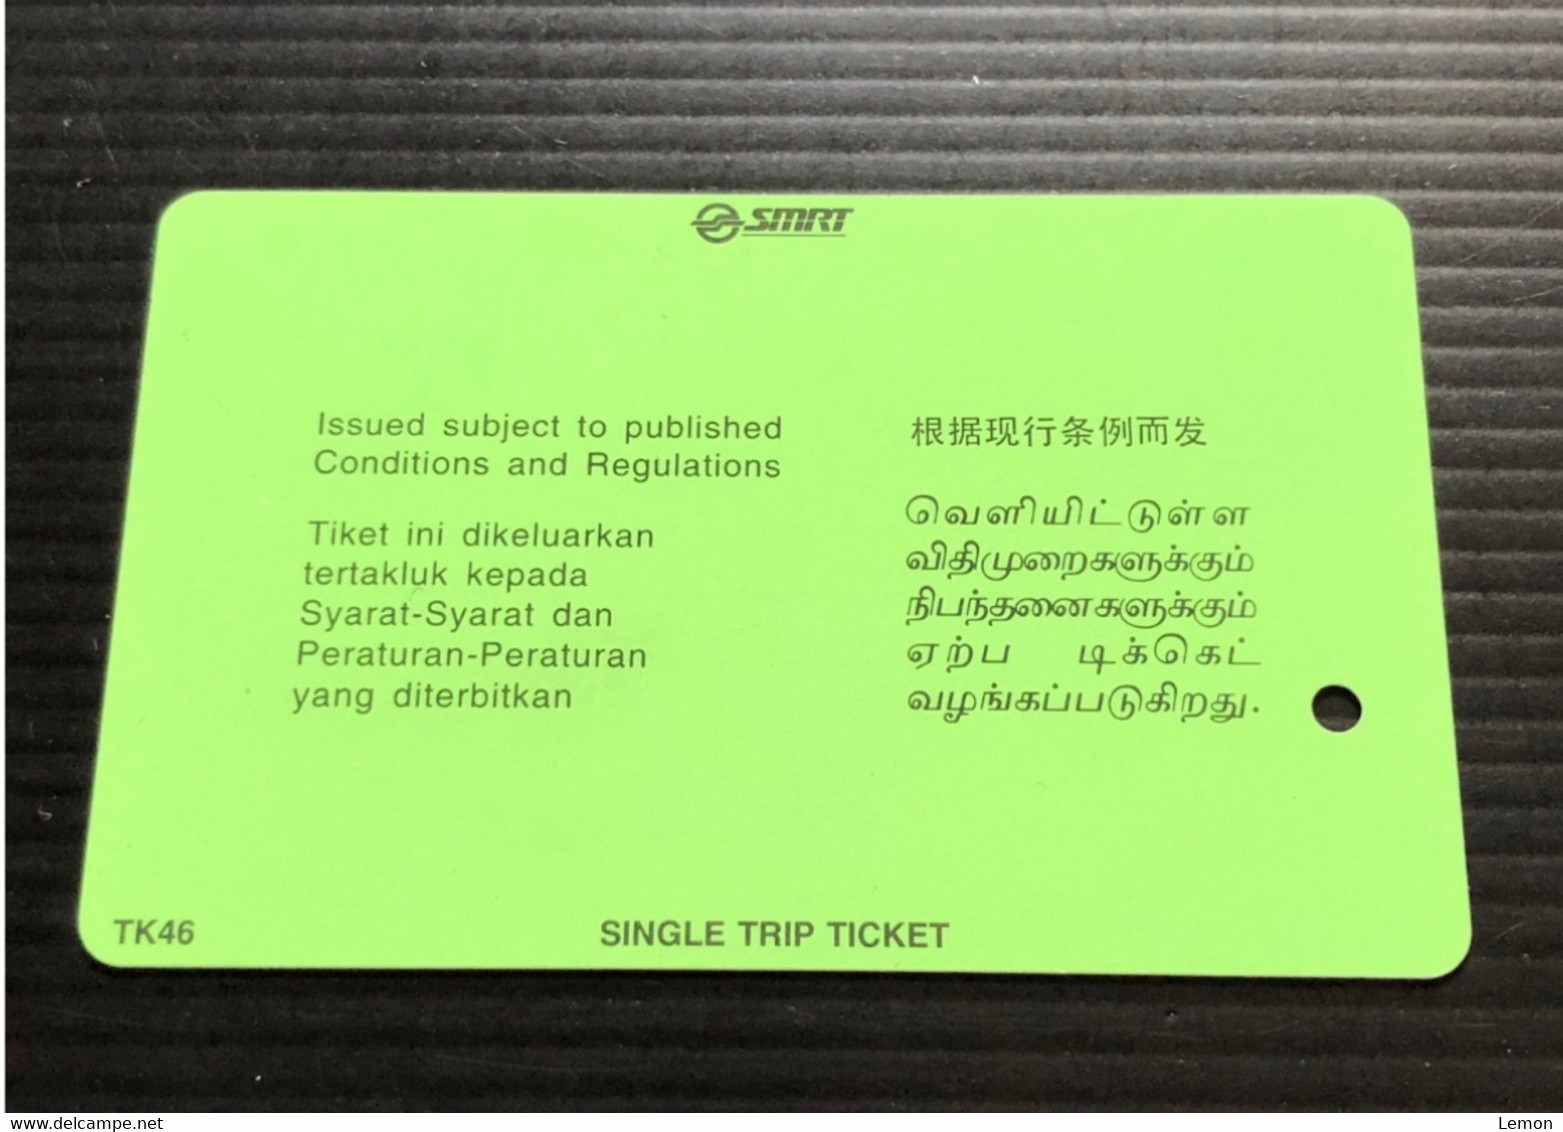 Singapore SMRT TransitLink Metro Train Subway Ticket Card, Hotel Intercontinental Singapore, Set Of 1 Used Card - Singapore